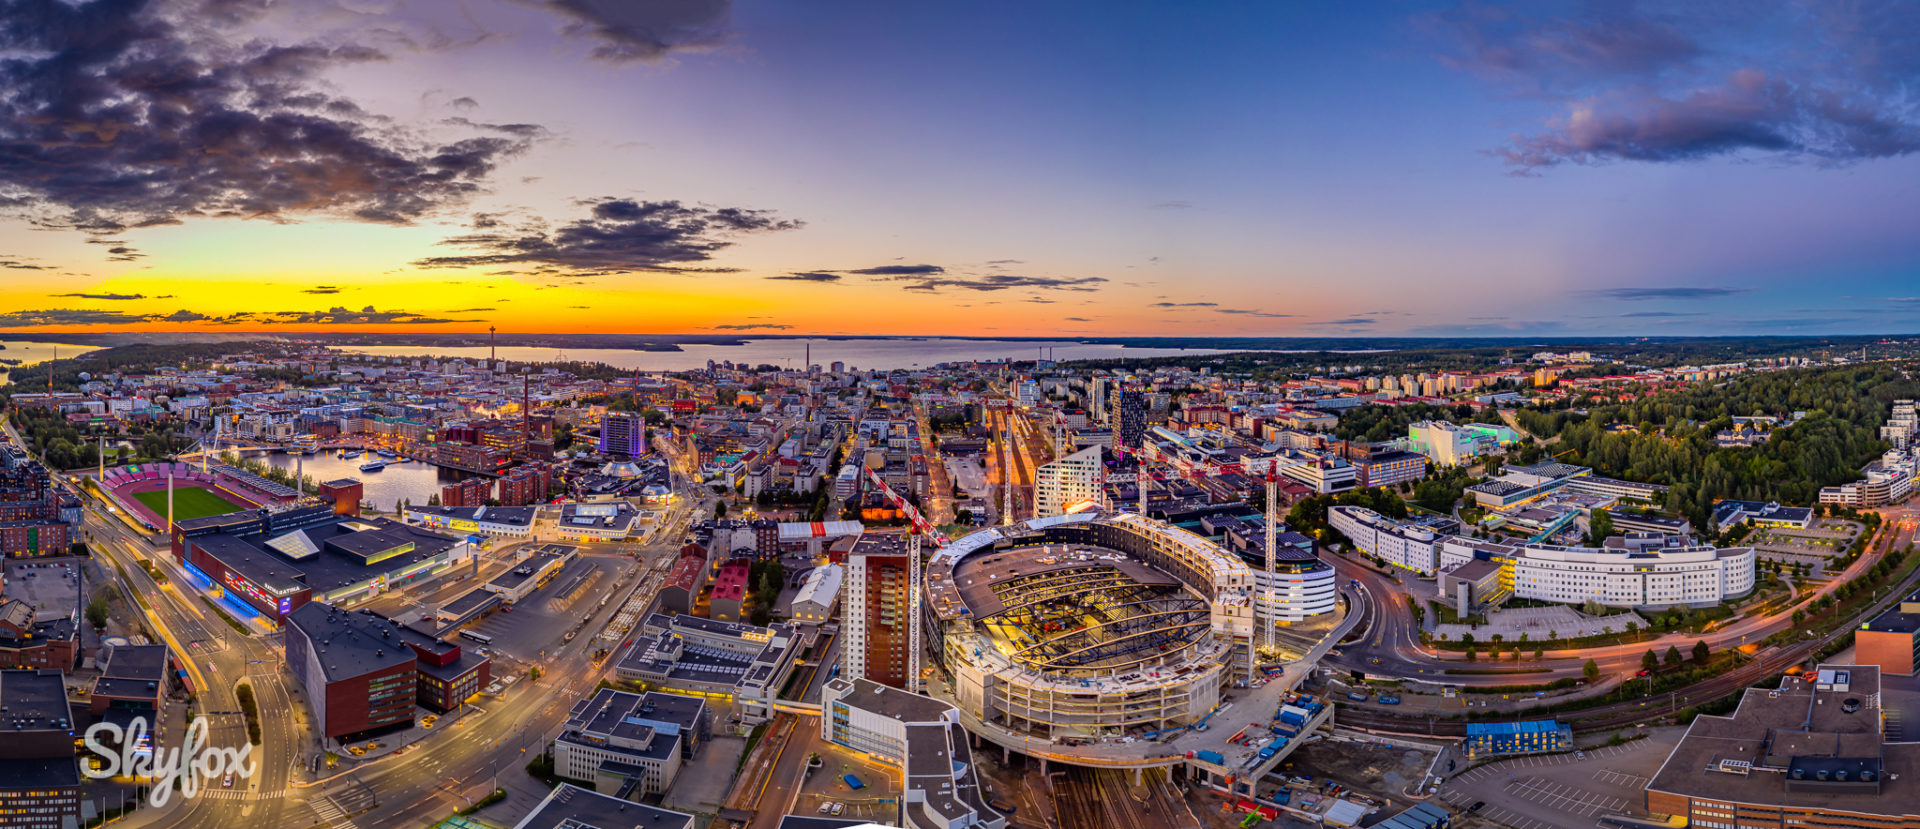 Tampere panorama skyview. Photo: Marko Kallio